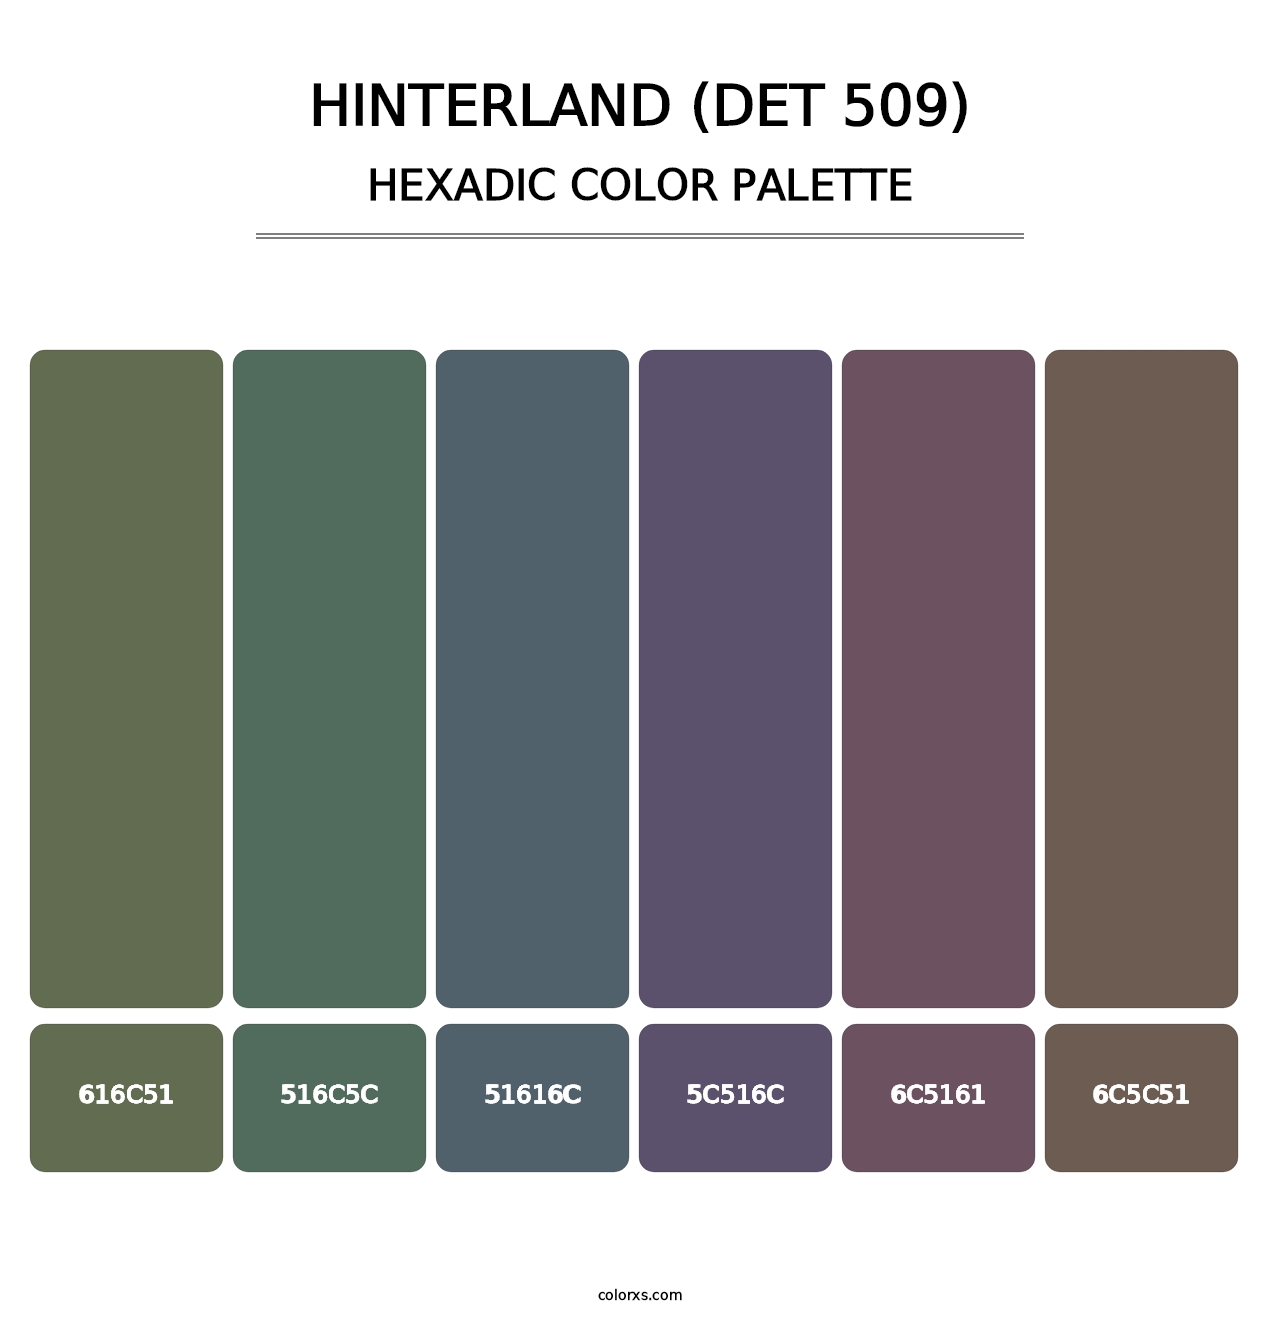 Hinterland (DET 509) - Hexadic Color Palette